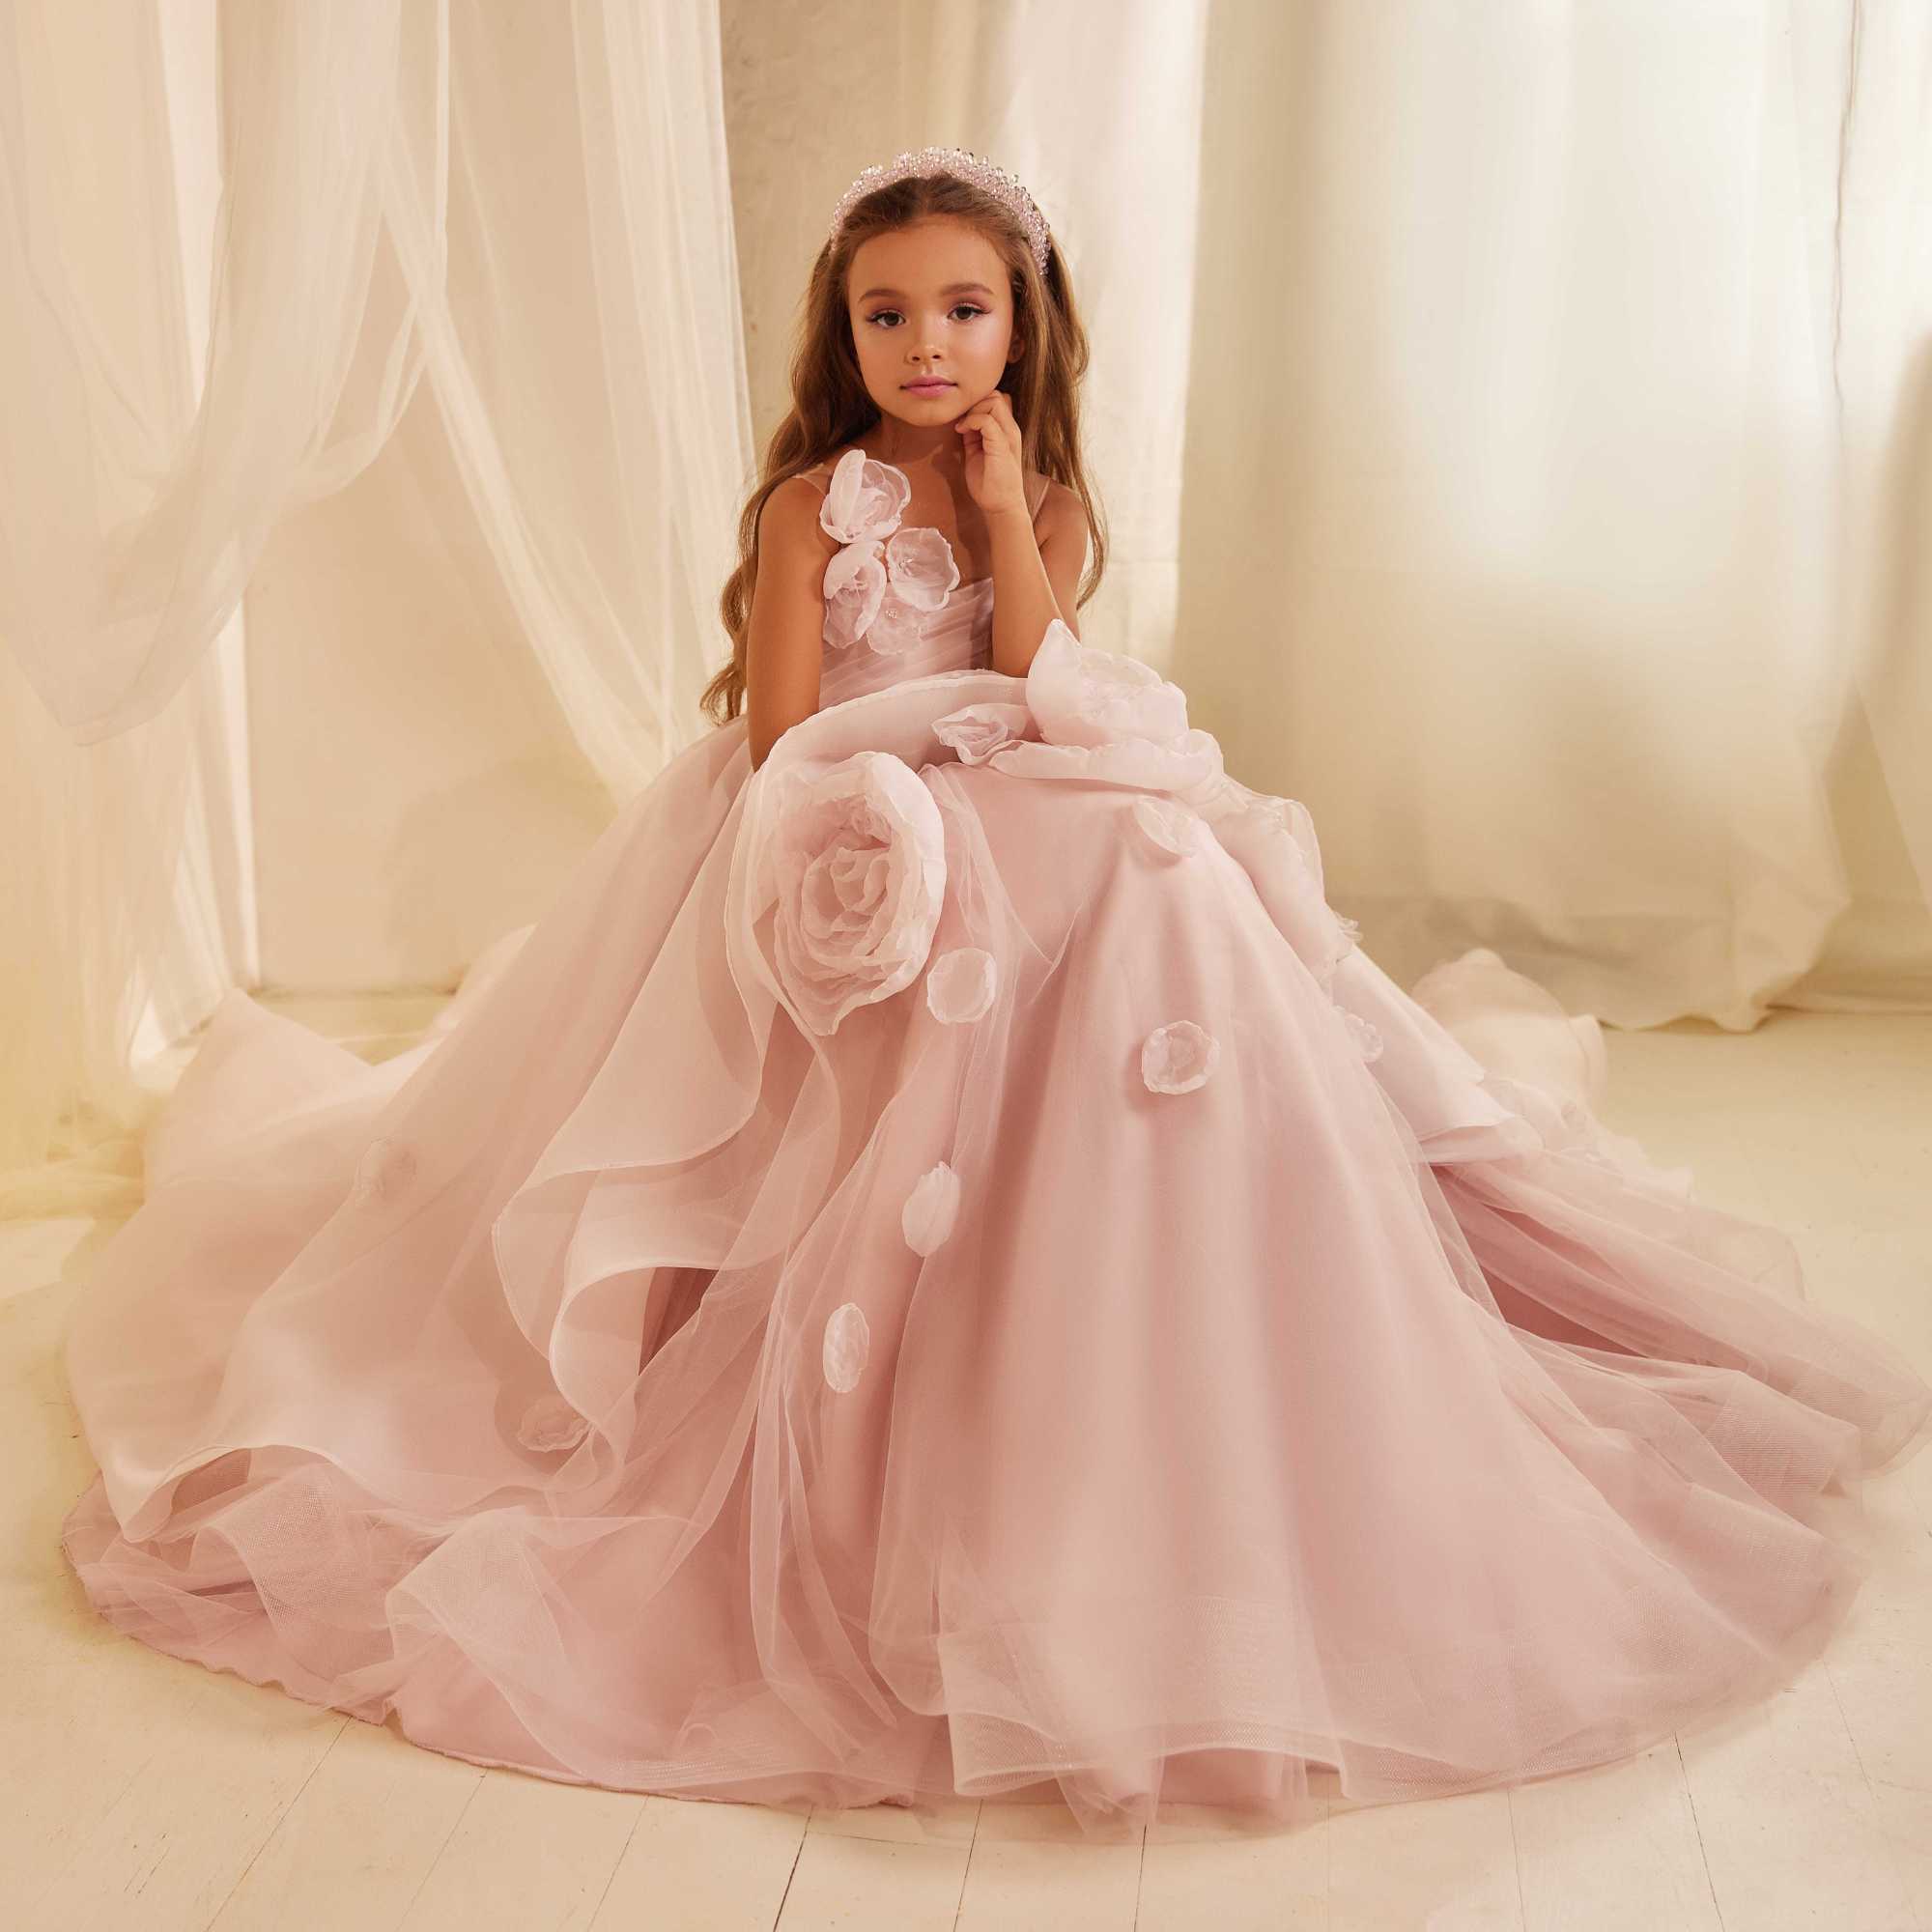 Skylar Lux Princess Dress